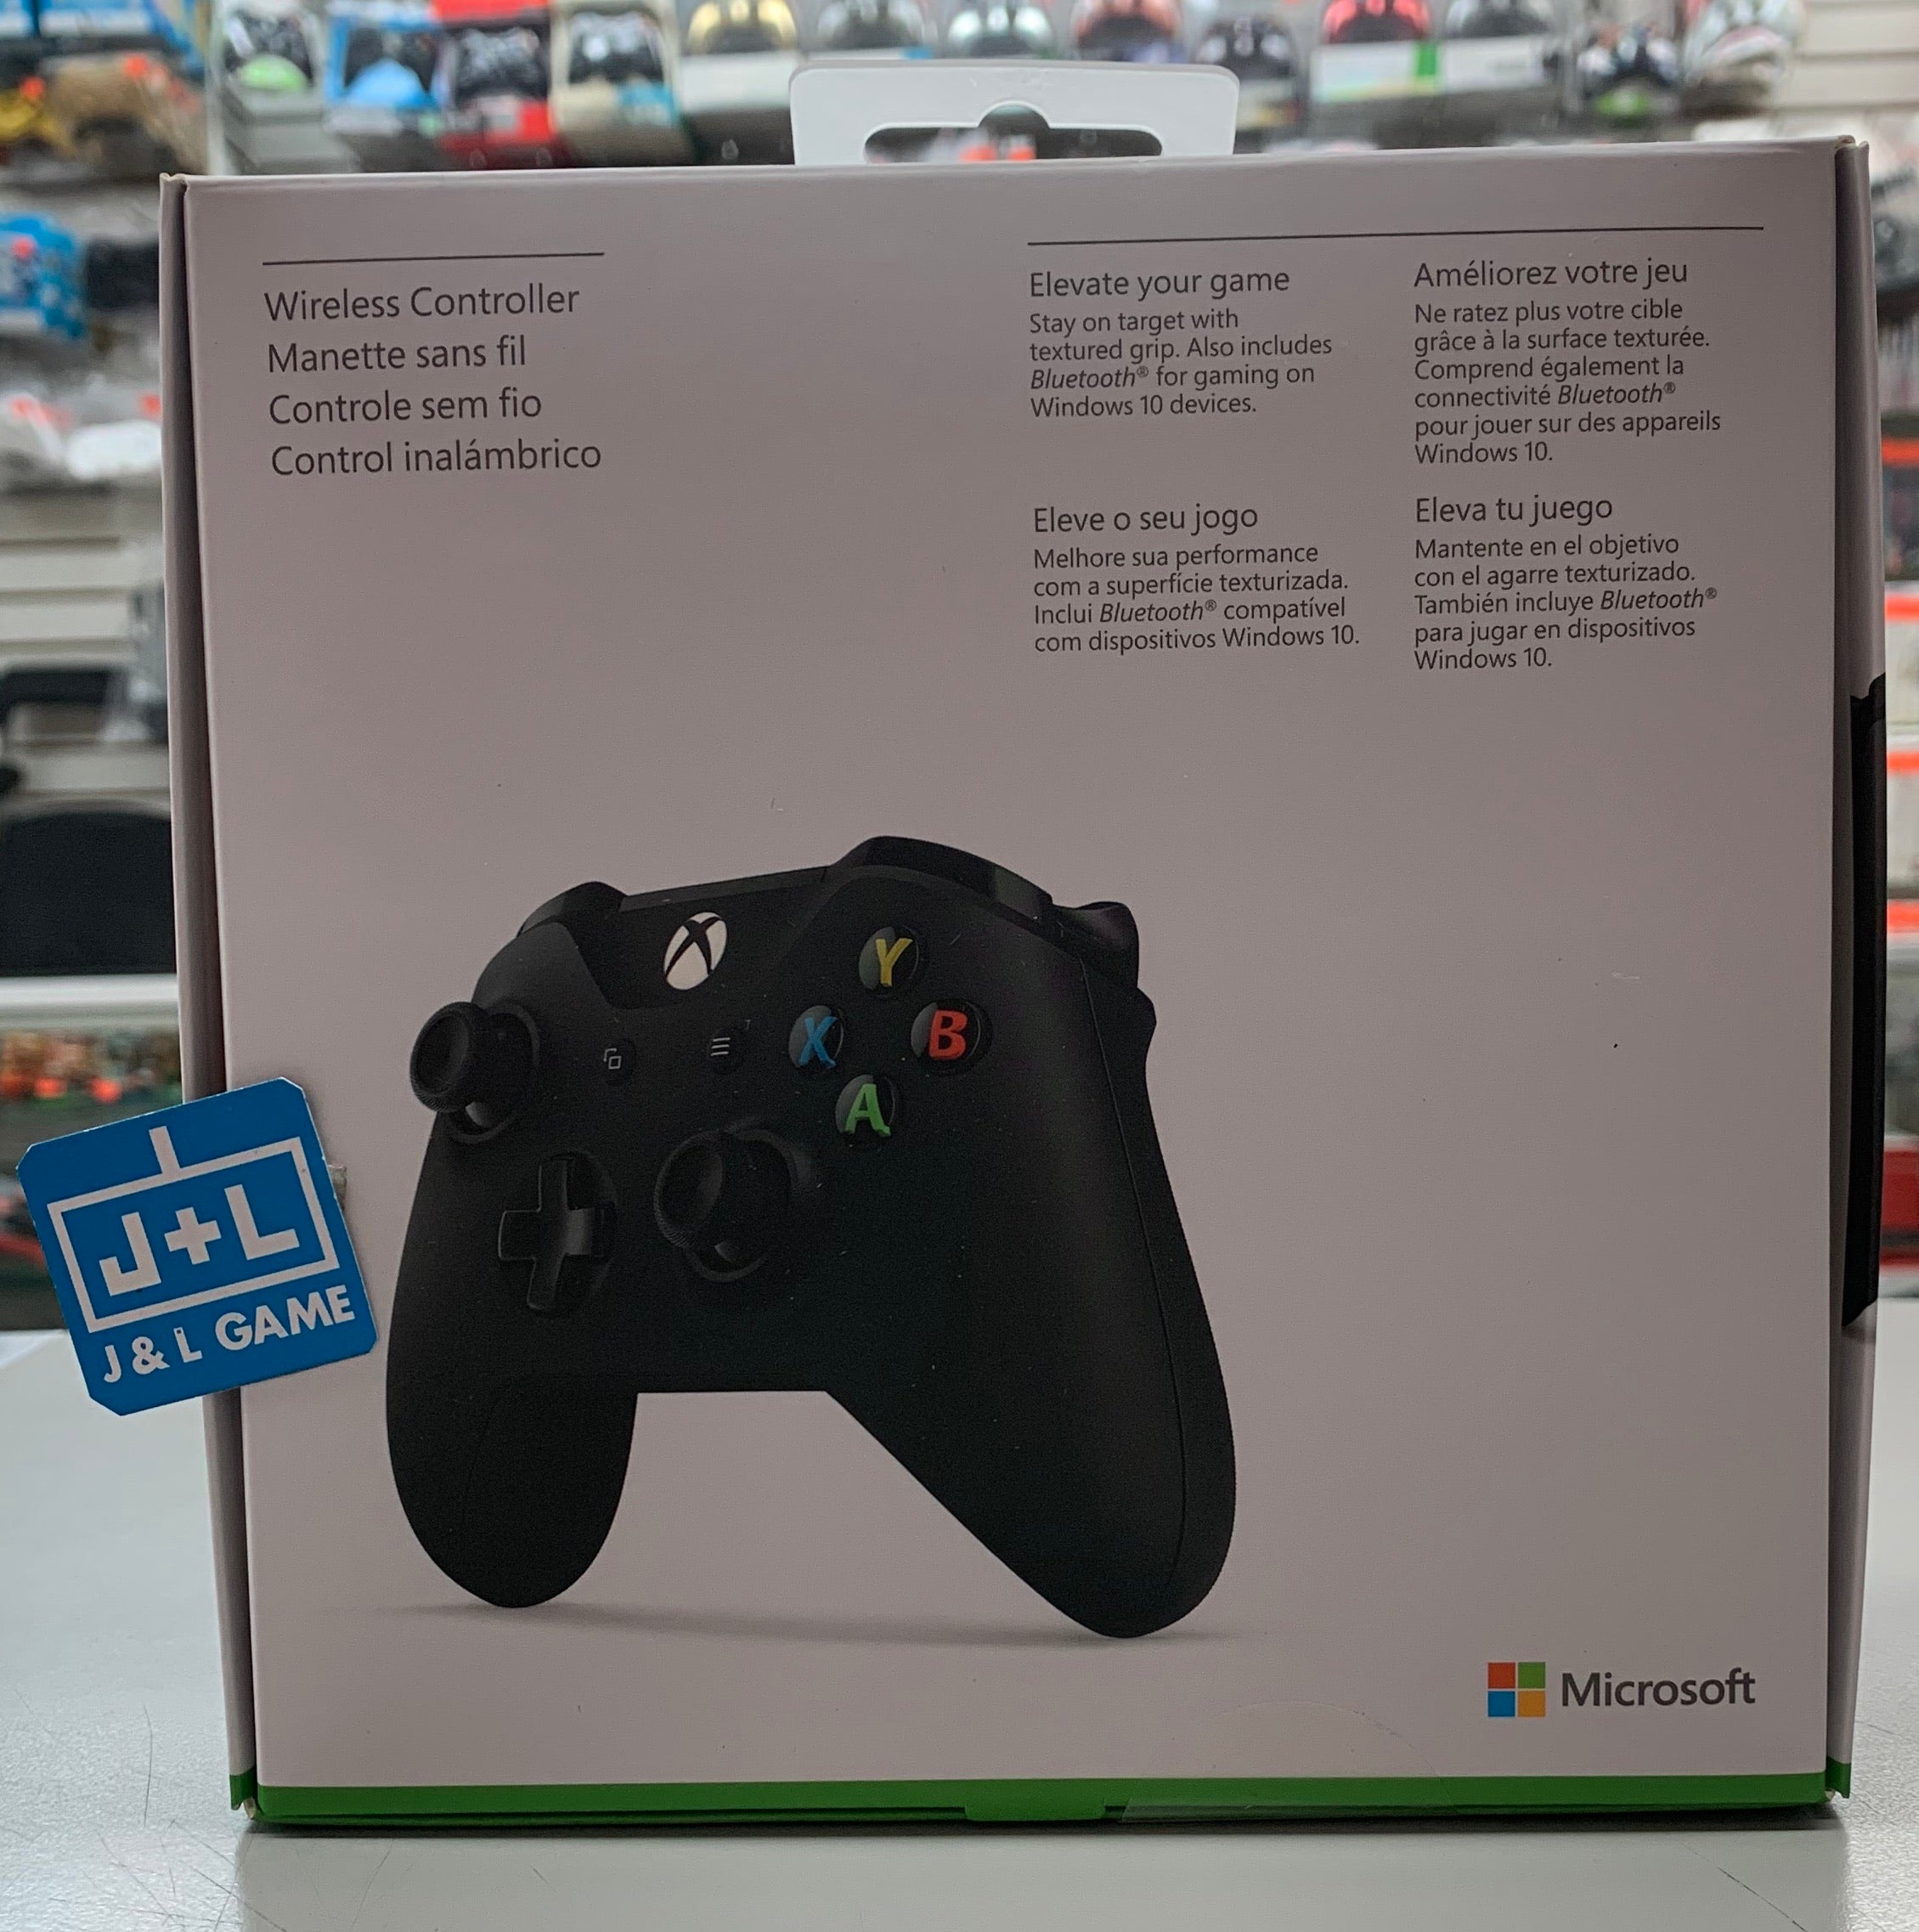 Microsoft Xbox One Wireless Controller (Black) - (XB1) Xbox One Accessories Microsoft   